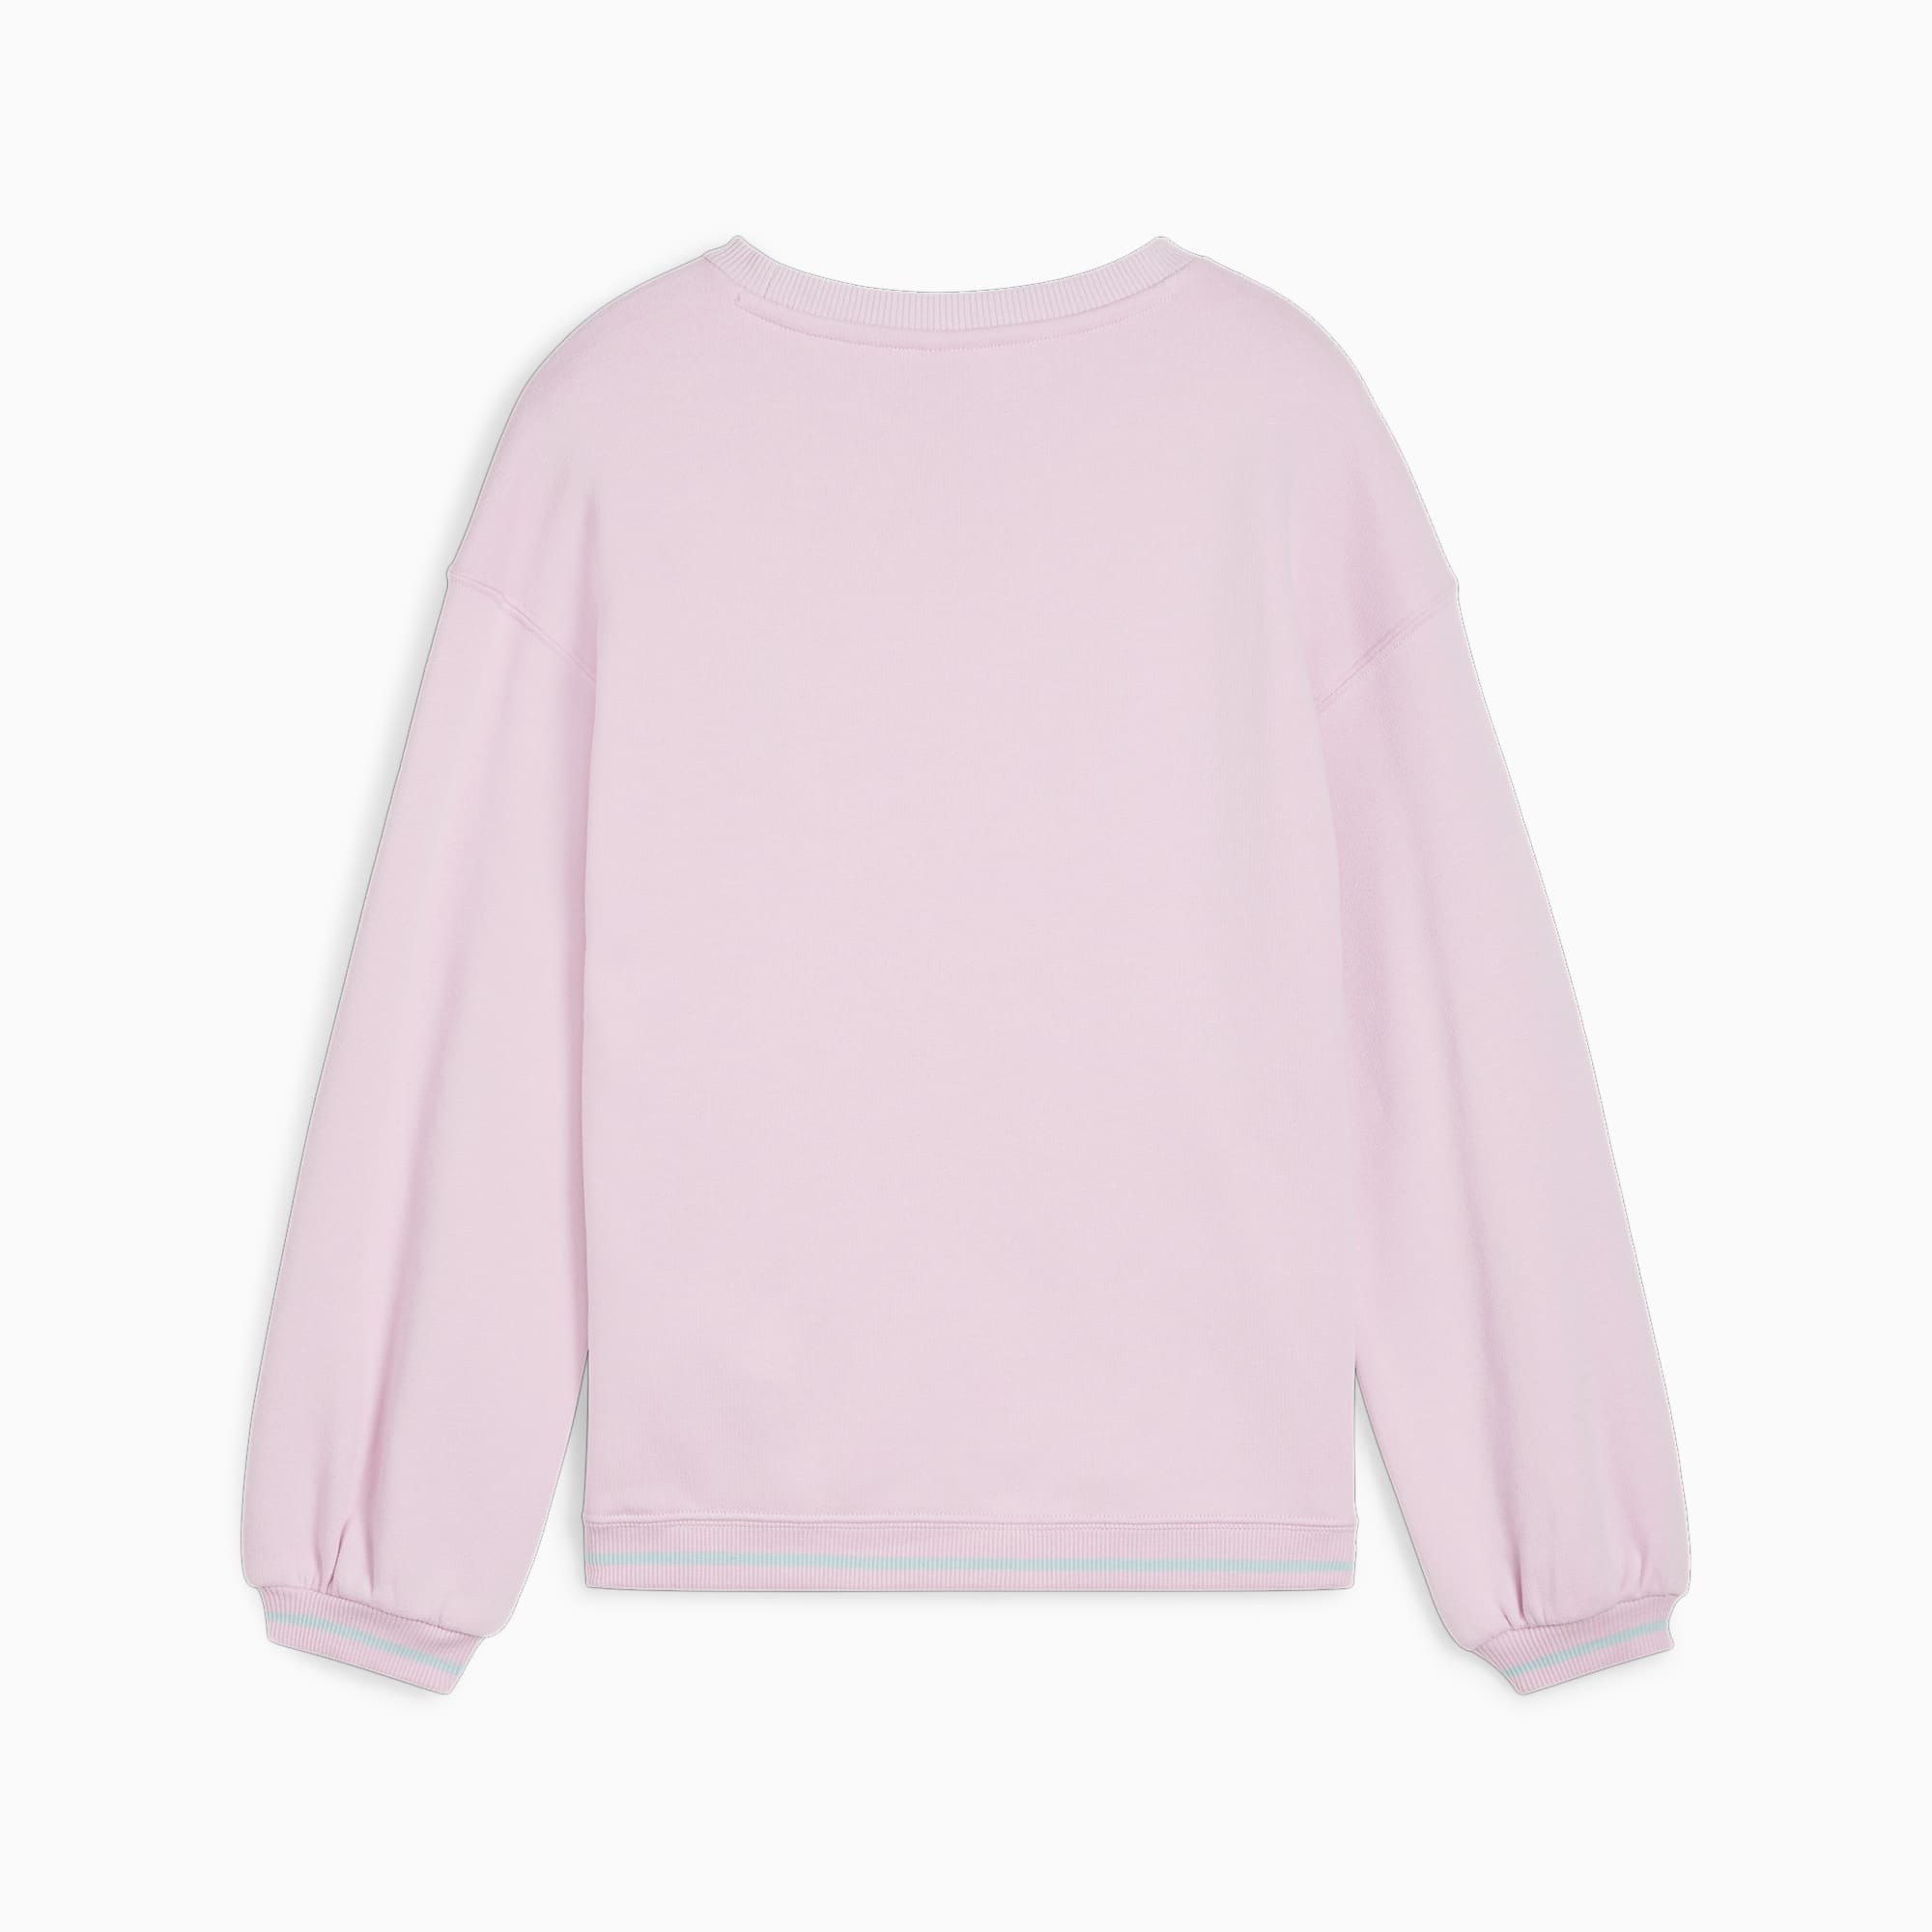 PUMA Classics Match Point Youth Sweatshirt, Grape Mist, Size 128, Clothing